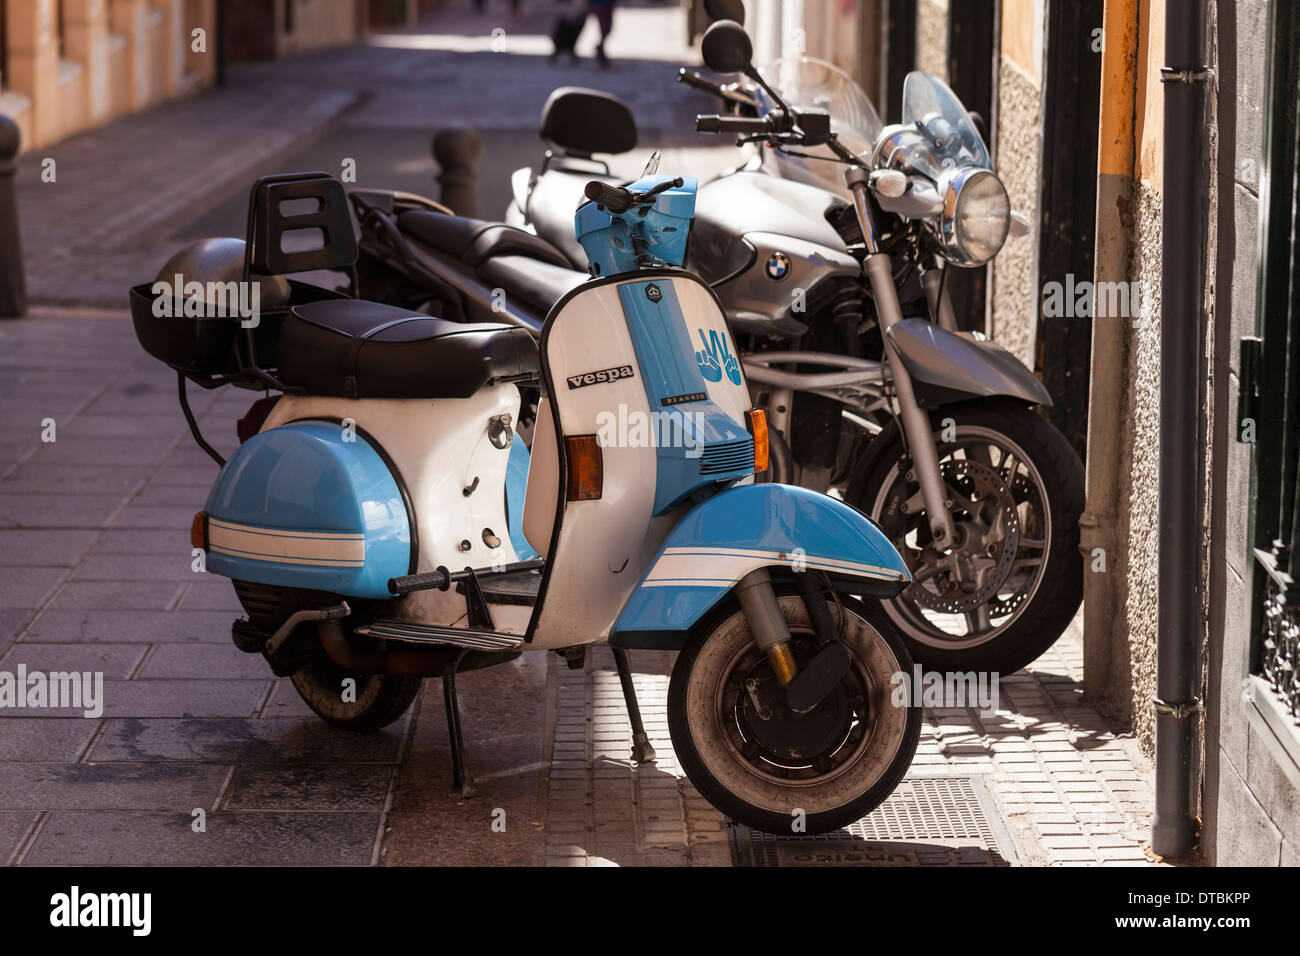 Vespa scooter parked alongside a BMW motorcycle in a side street in Santa ruz, Tenerife, Canary Islands, Spain. Stock Photo